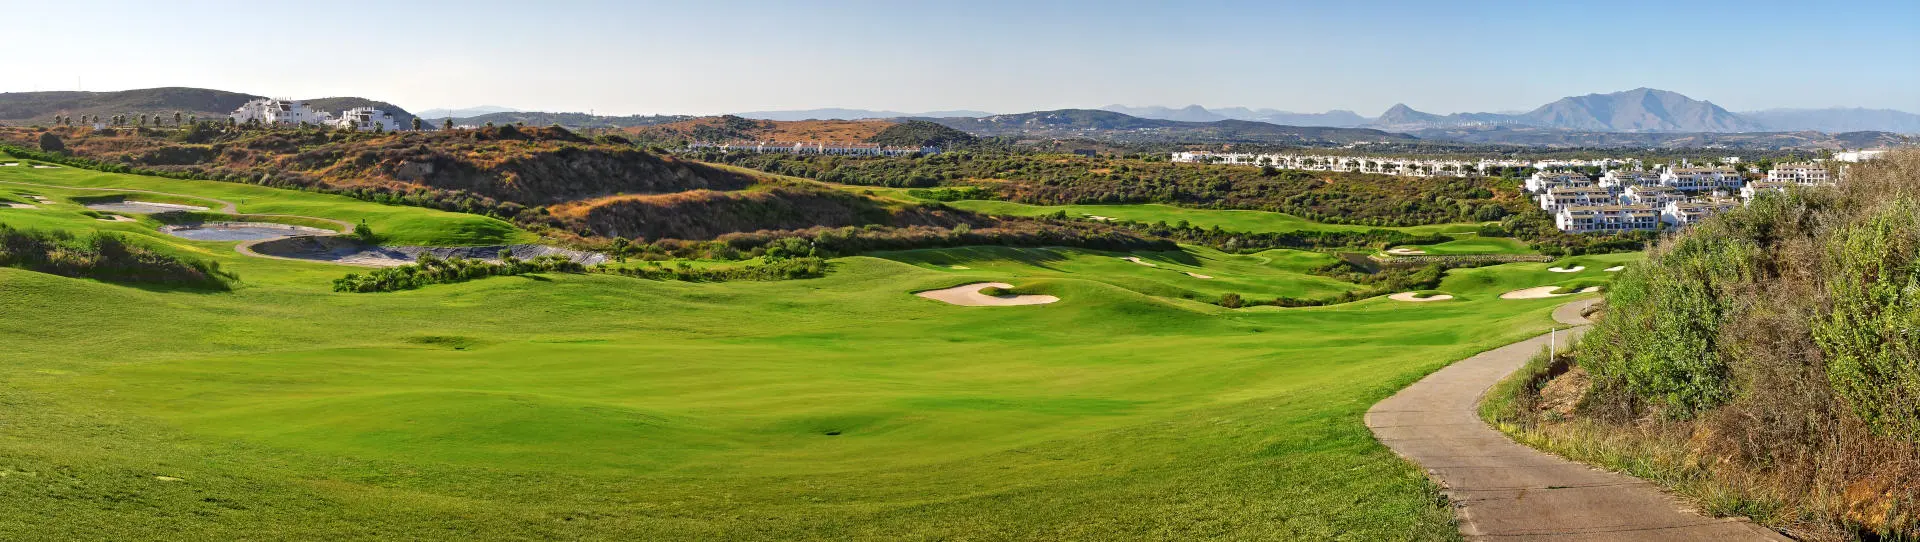 Spain golf courses - La Hacienda Alcaidesa Heathland Golf - Photo 2